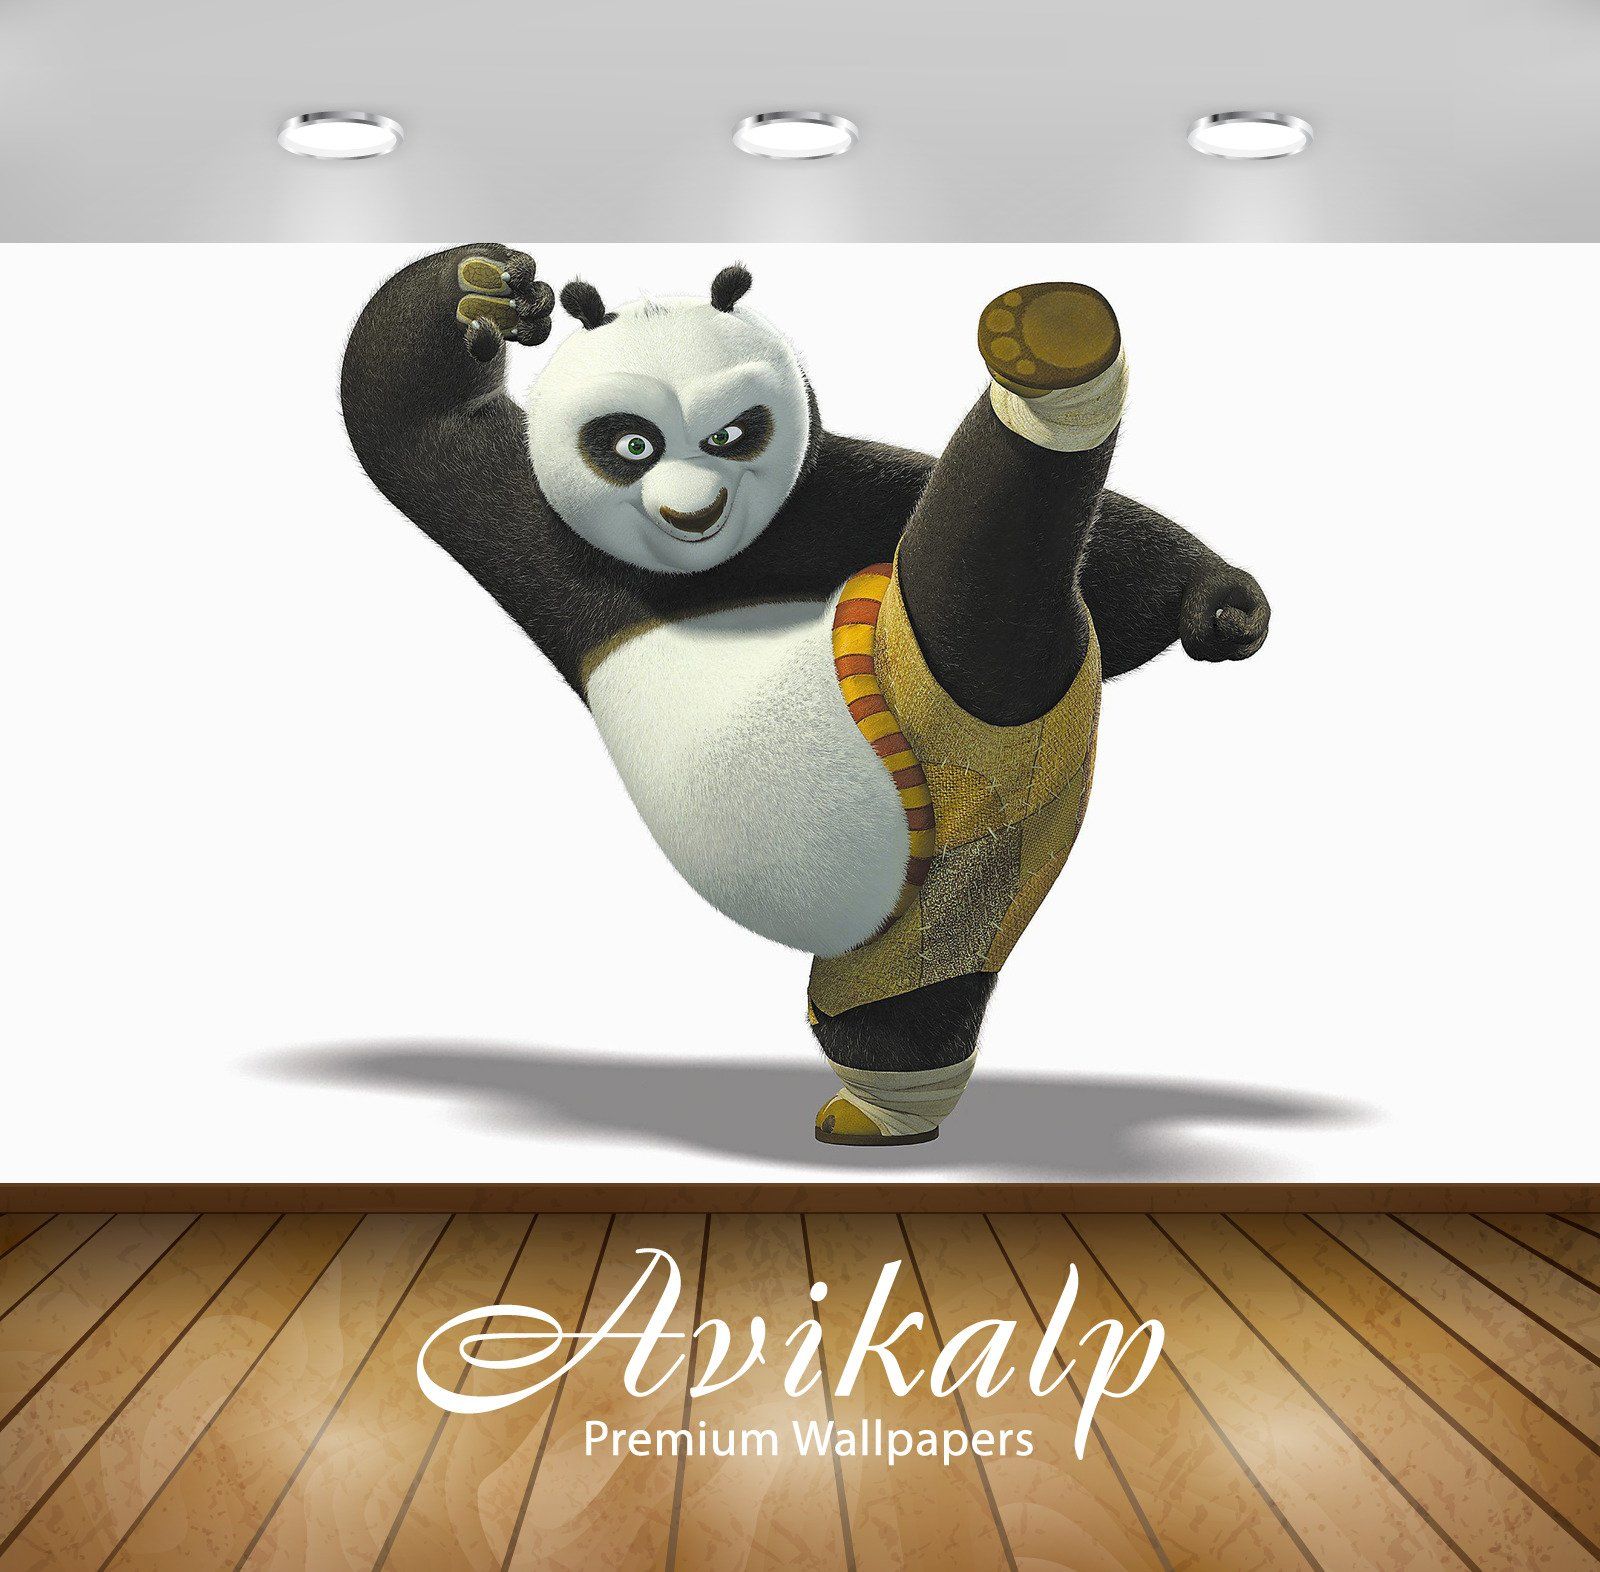 Avikalp Exclusive Awi3432 Kung Fu Panda Cartoon Full HD Wallpaper for Living room Hall Kids Room. Kids room wallpaper, Full HD wallpaper, 3D wallpaper cartoon